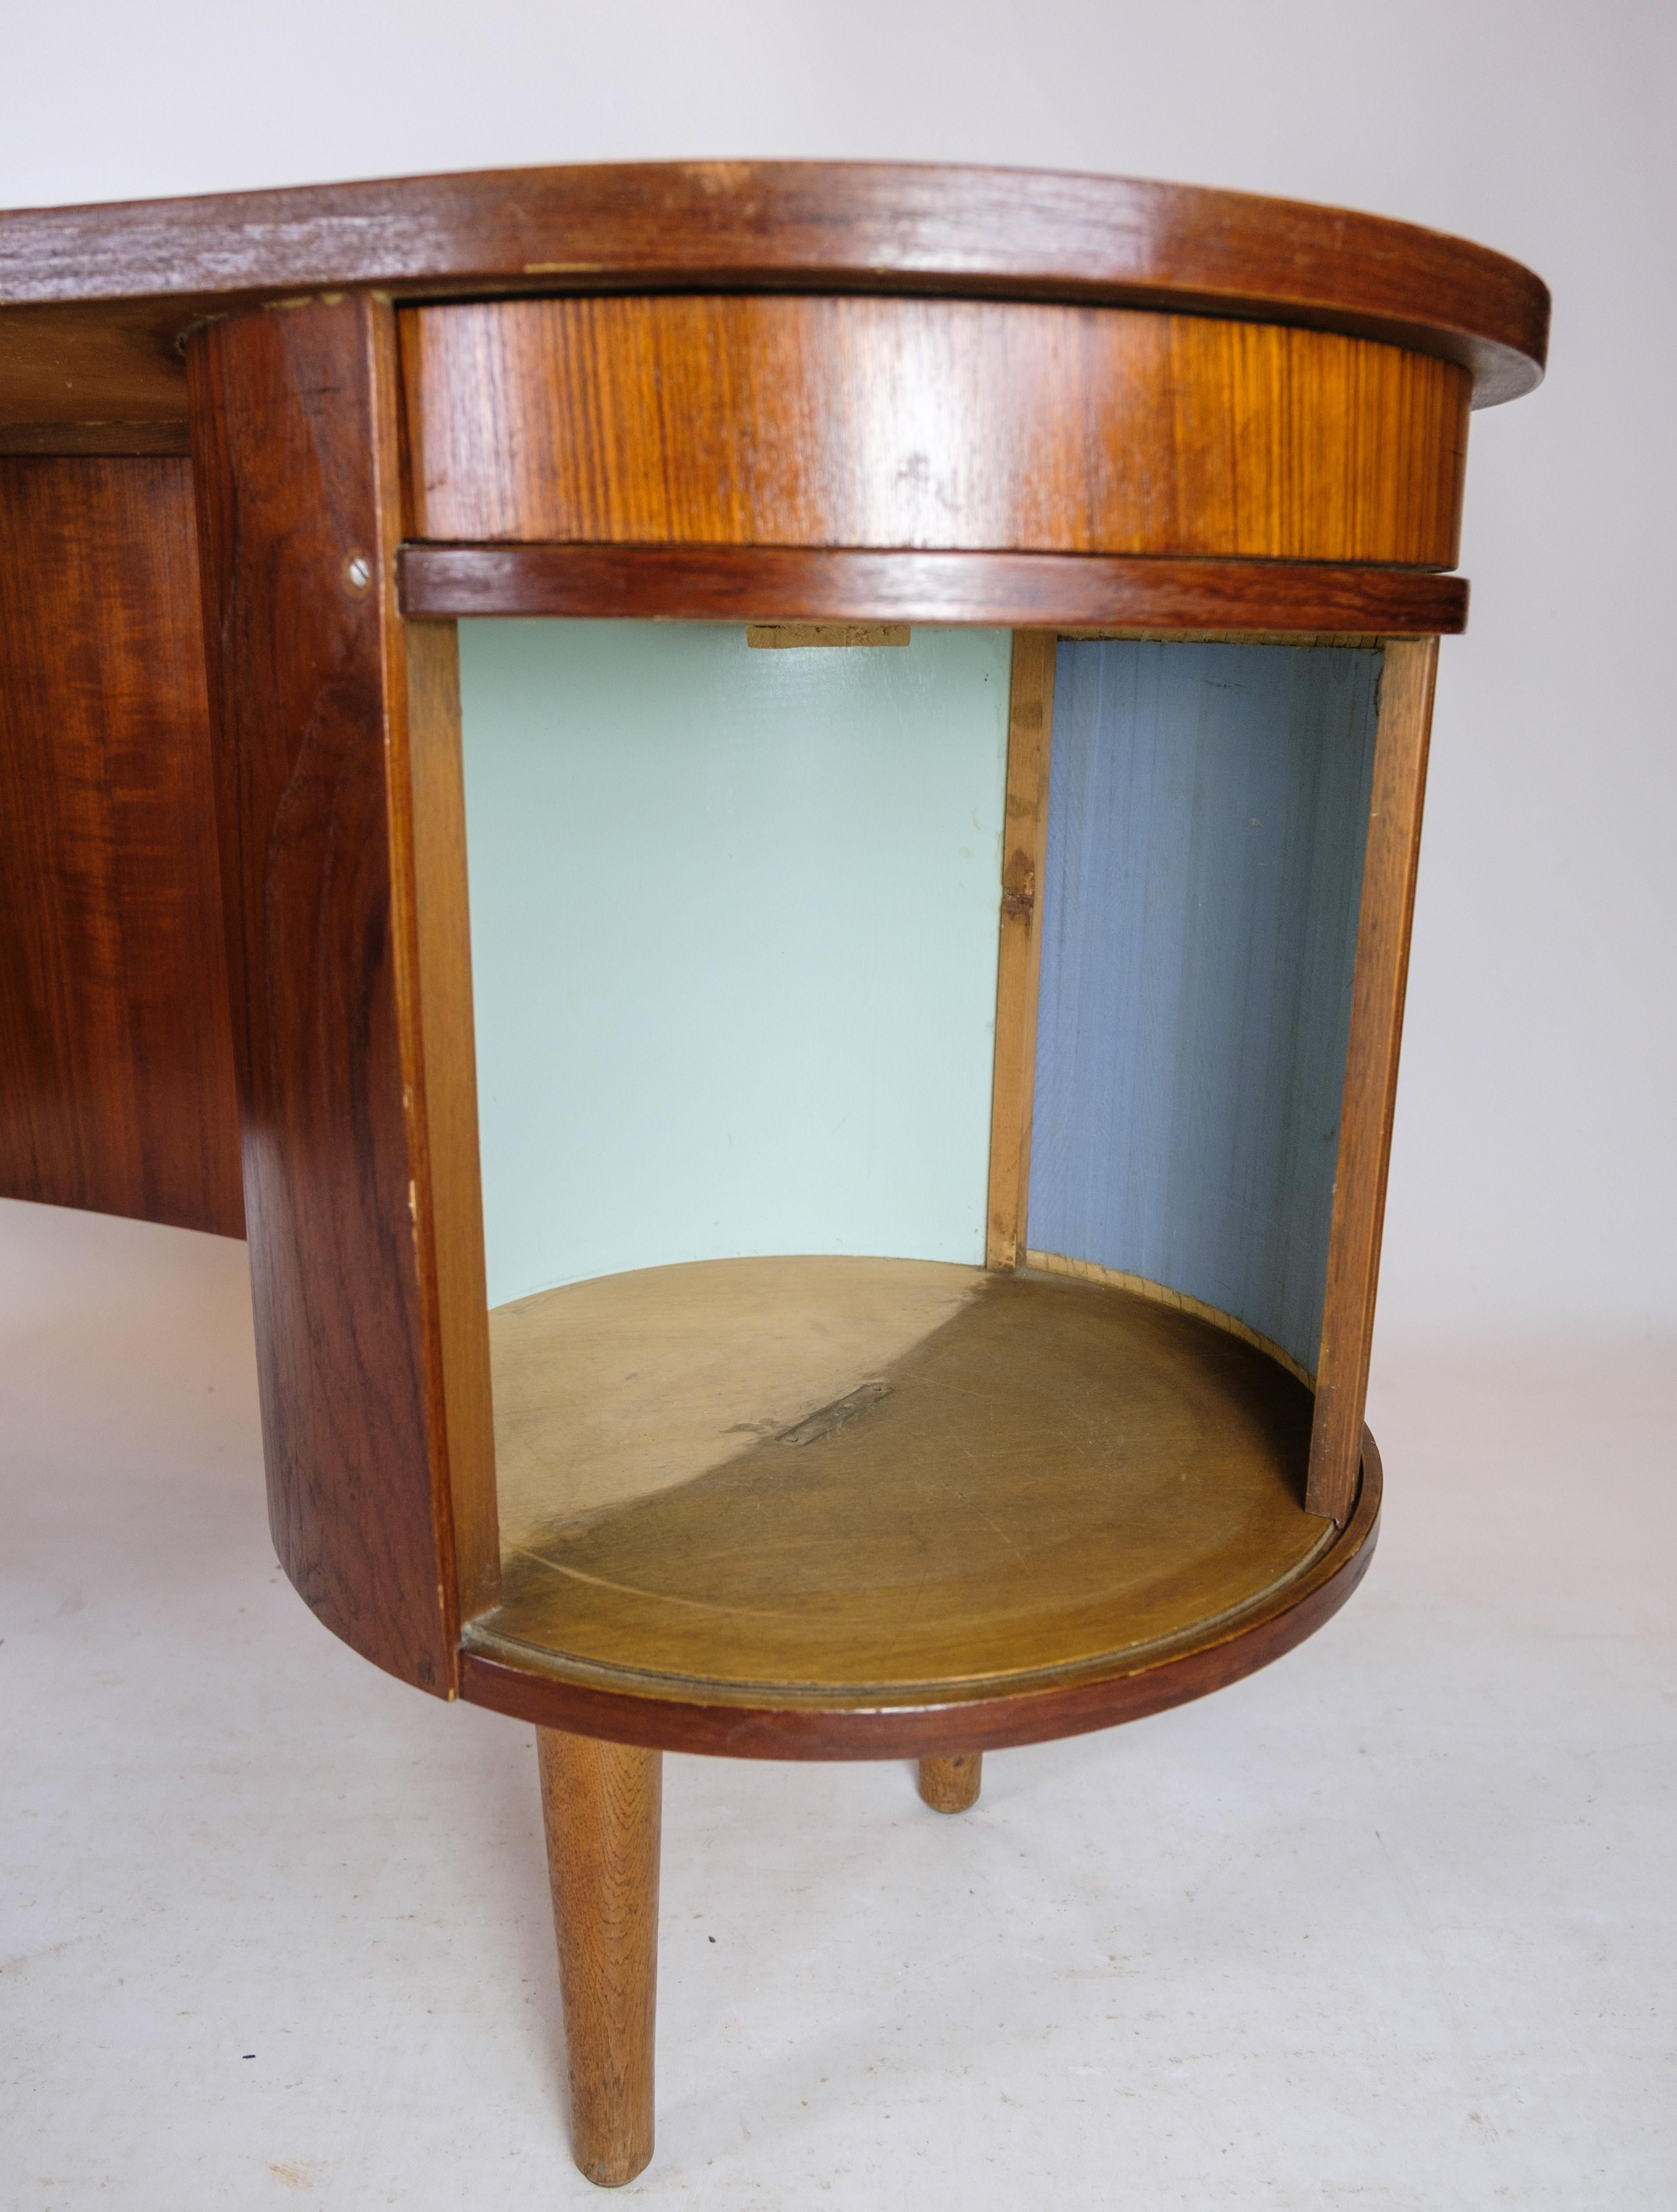 Mid-20th Century Desk in Teak wood model 54 by Kai Kristiansen and Feldballes furniture from 1954 For Sale